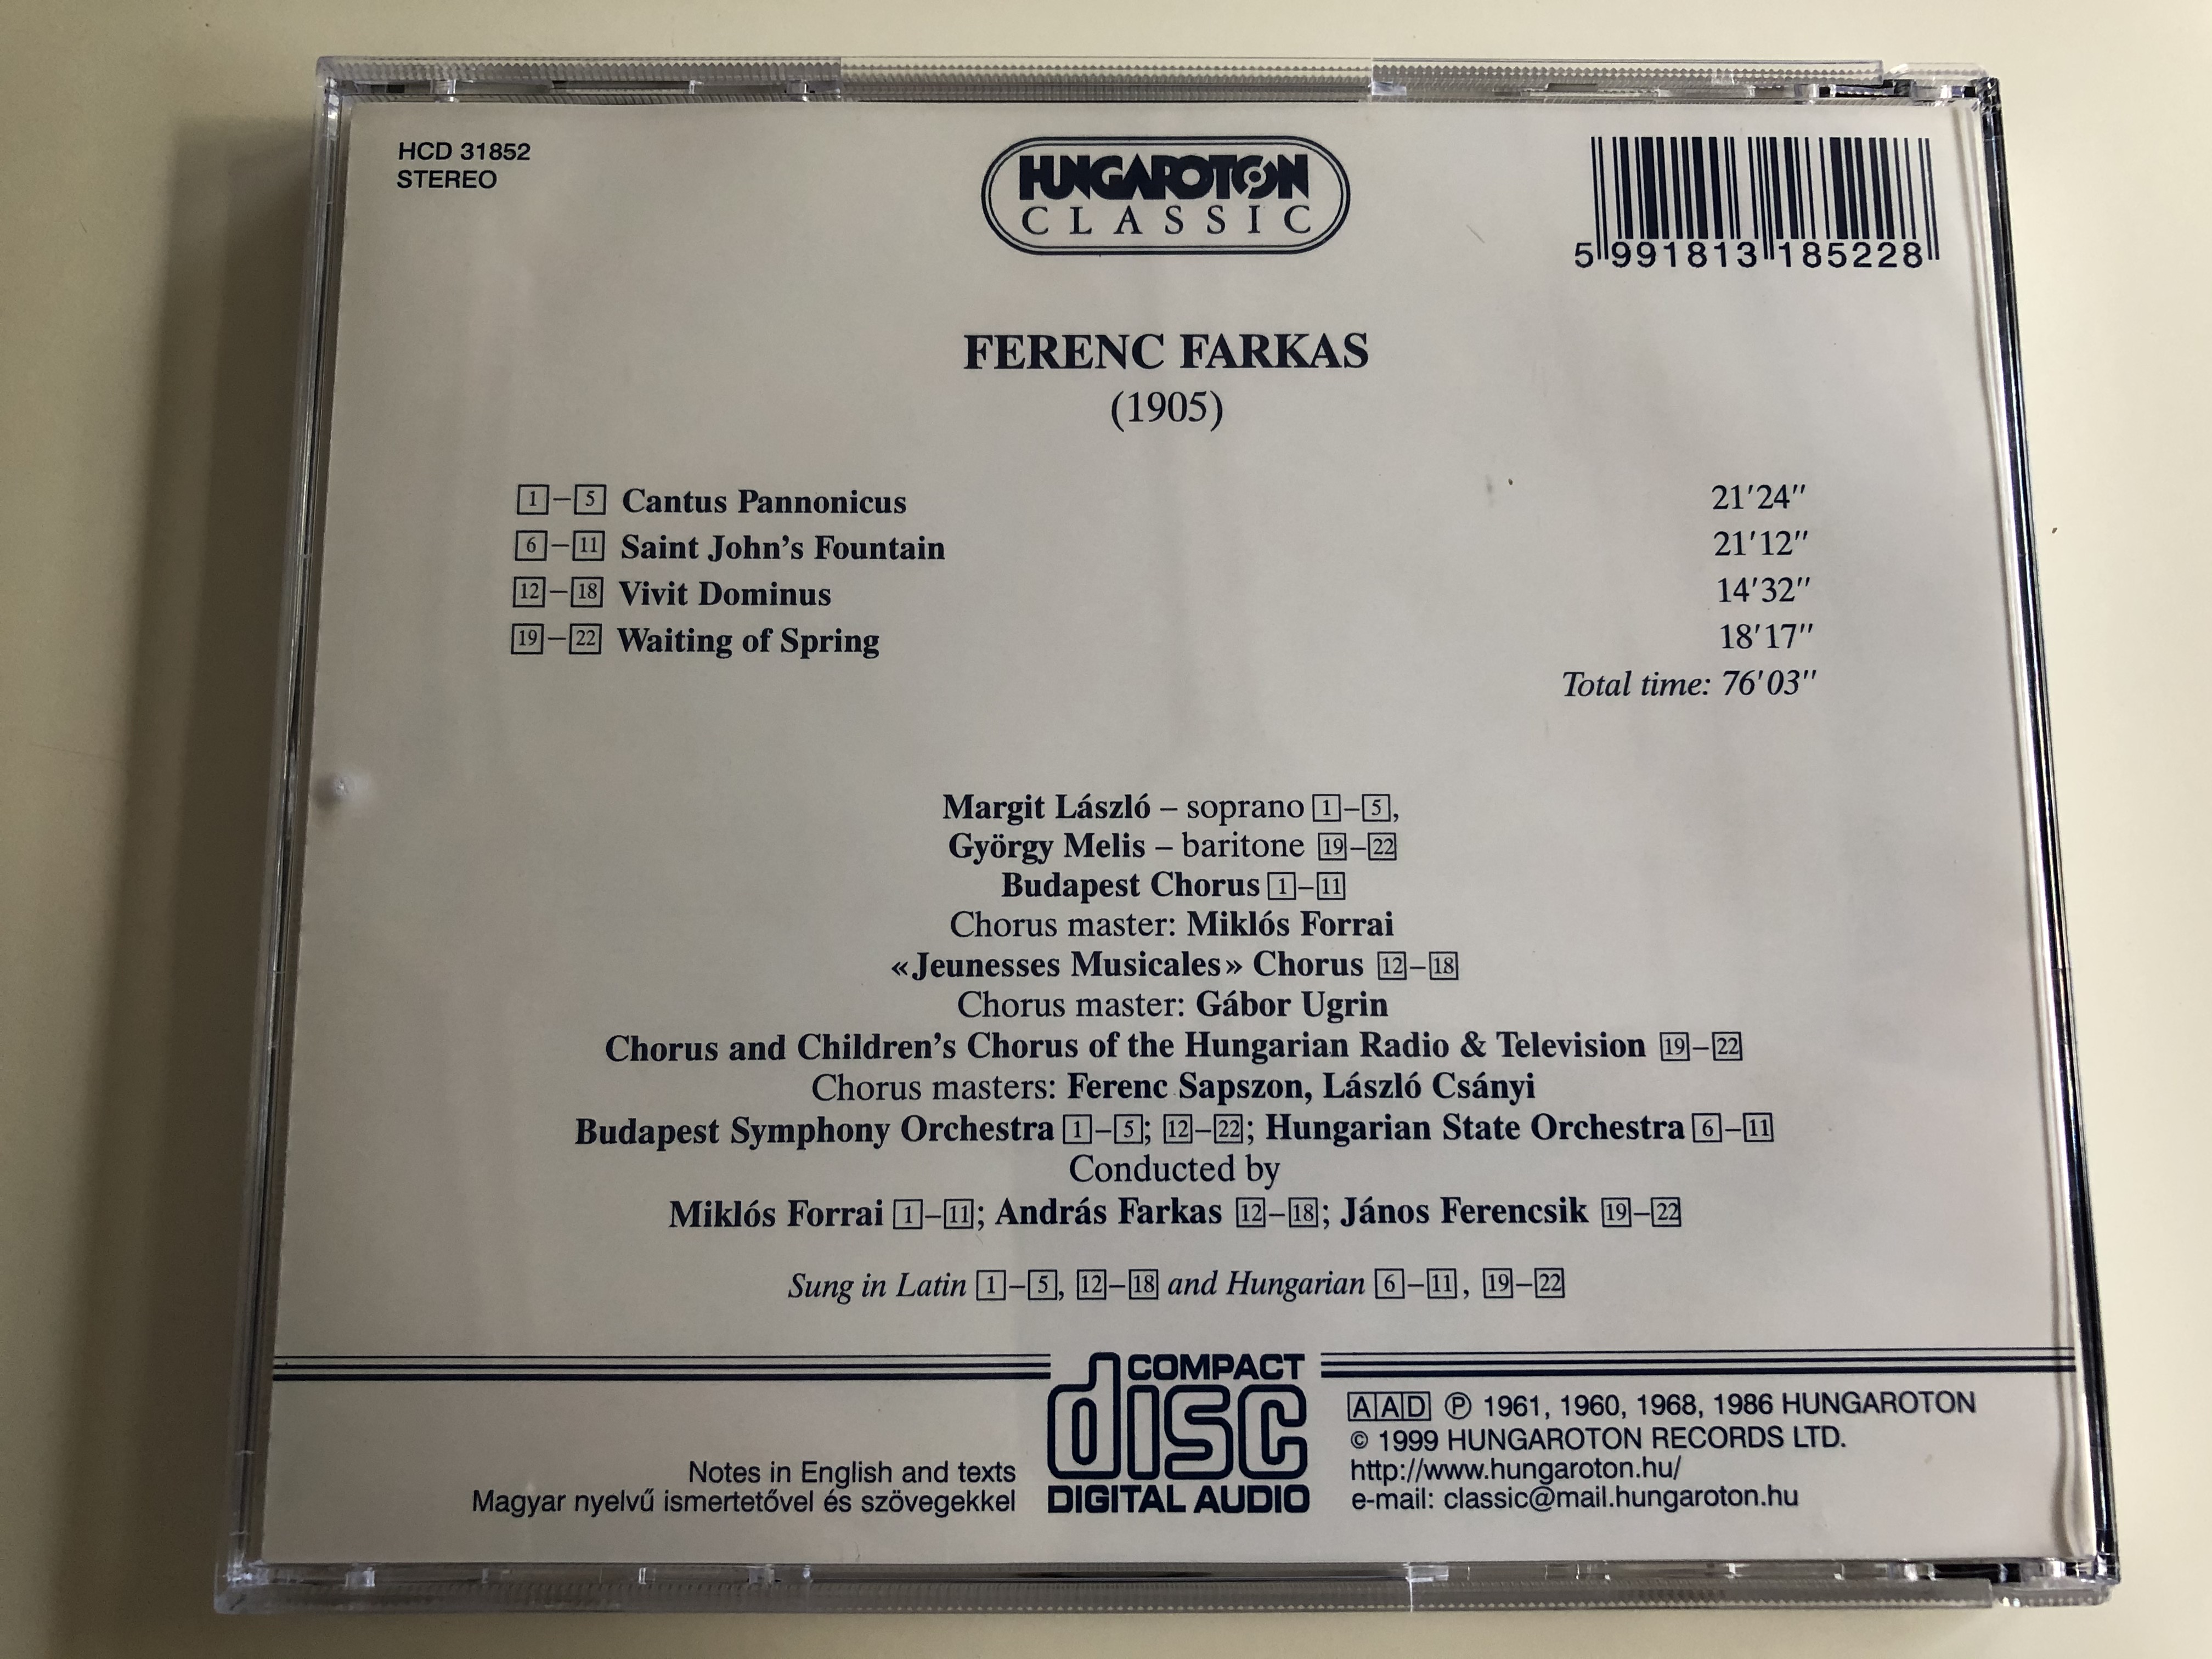 ferenc-farkas-cantatas-cantus-pannonicus-saint-john-s-fountain-vivit-dominus-waiting-of-the-spring-hungaroton-classic-audio-cd-1999-stereo-hcd-31852-9-.jpg